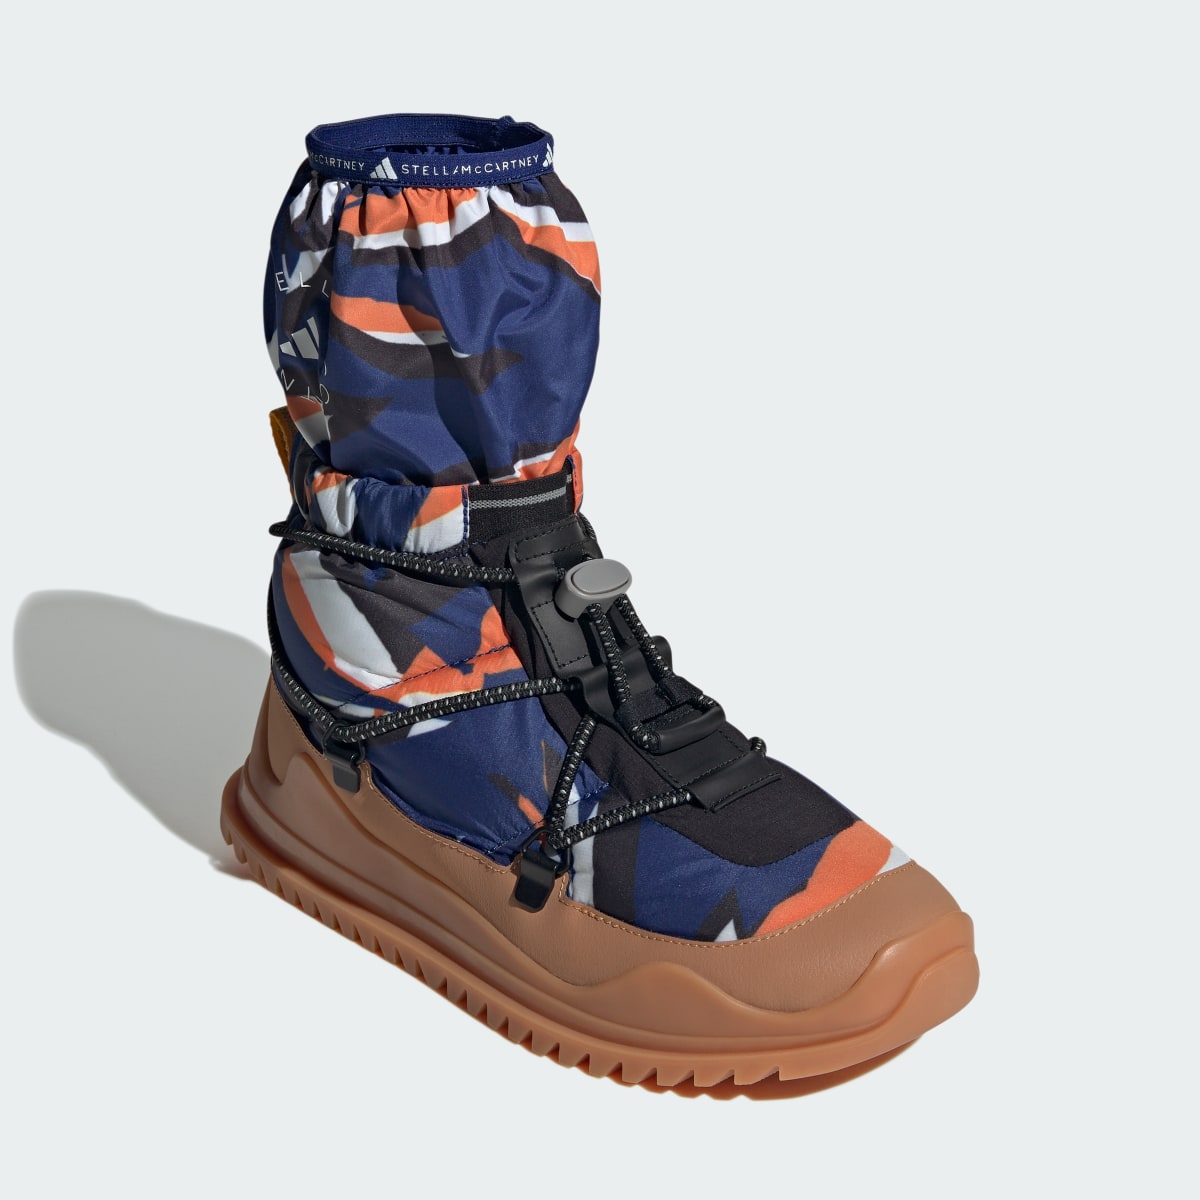 Adidas by Stella McCartney Winter Boots. 5